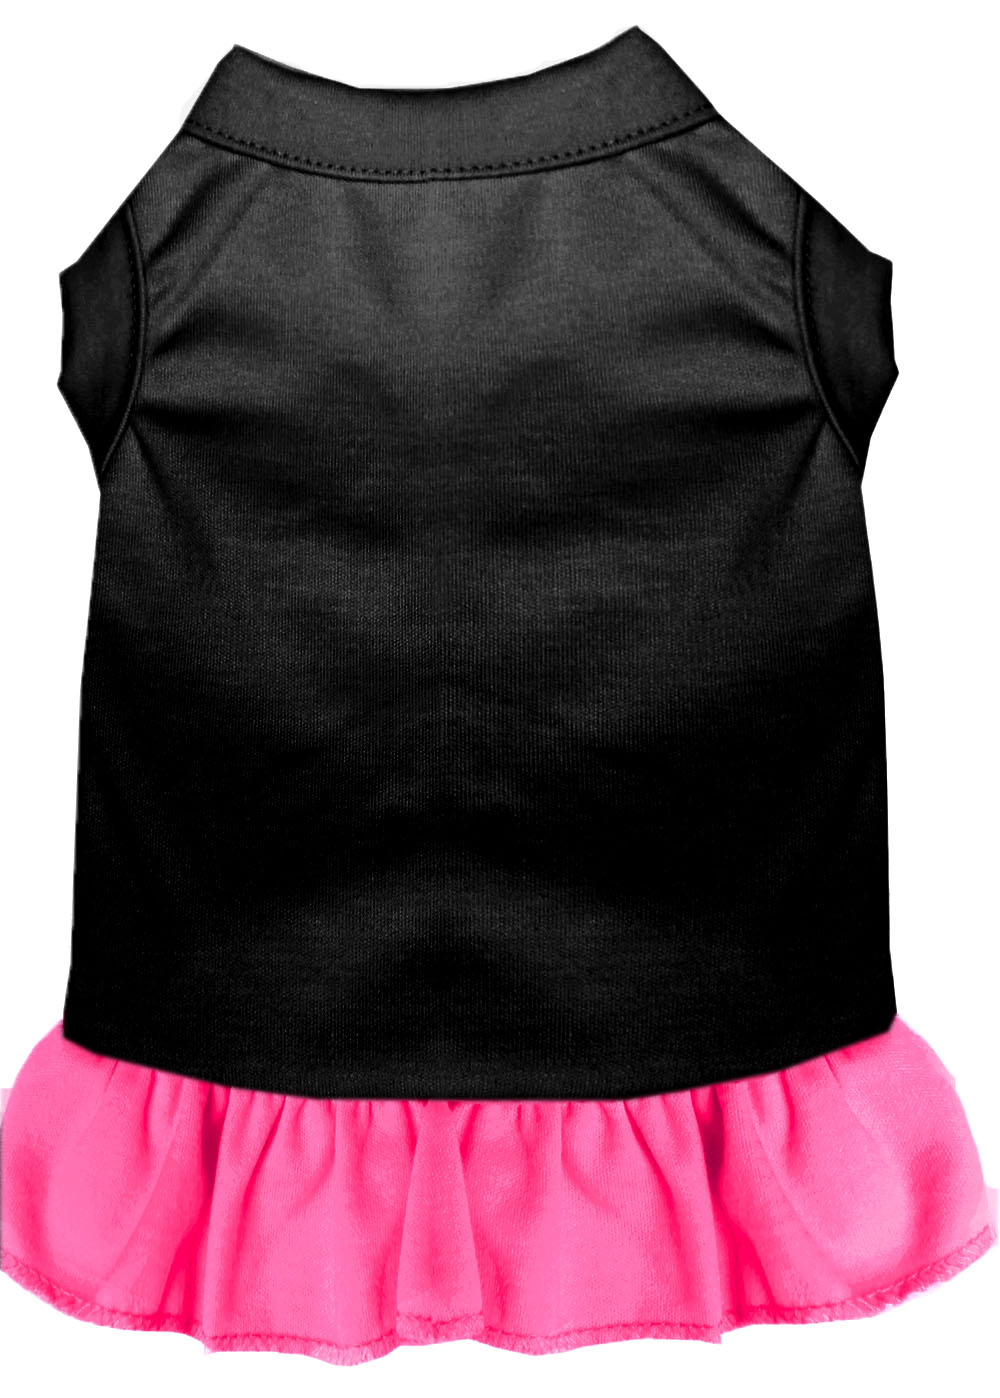 Plain Pet Dress Black with Bright Pink XS